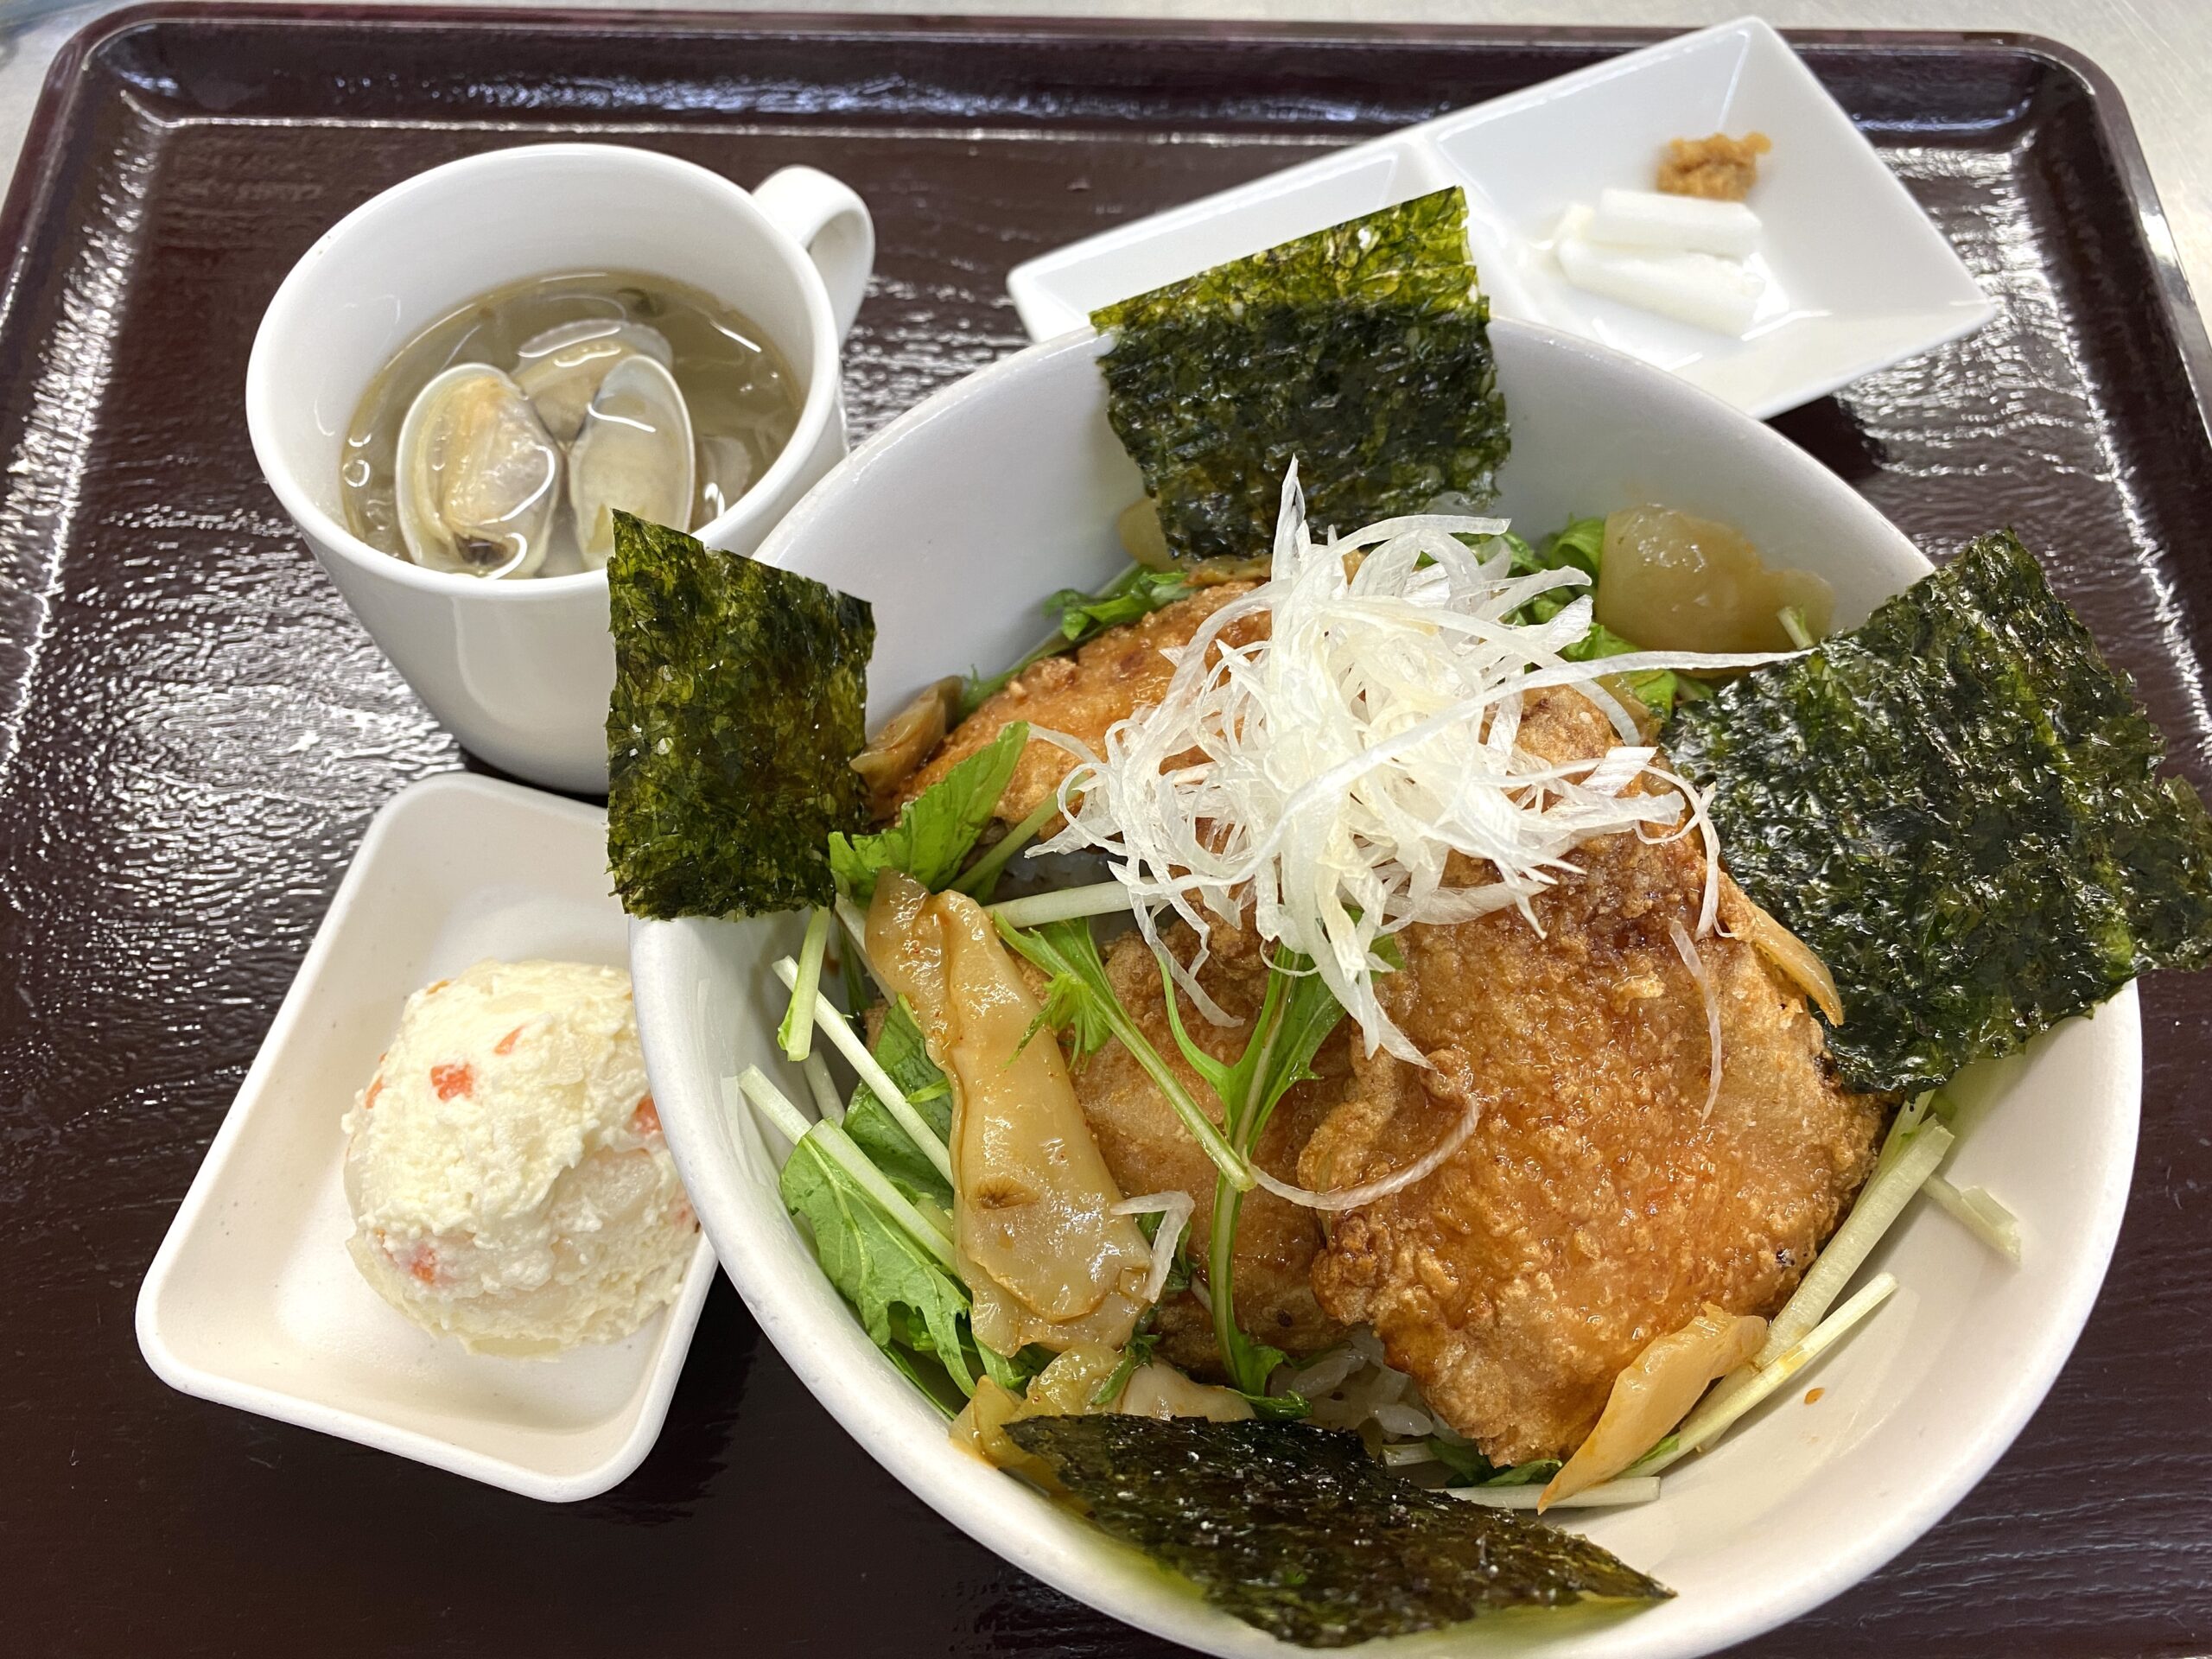 Michi-no-Eki Ryuhyokaido Abashiri - Enjoy the Salmon Zangi Rice Bowl at the Food Court Kinema-kan